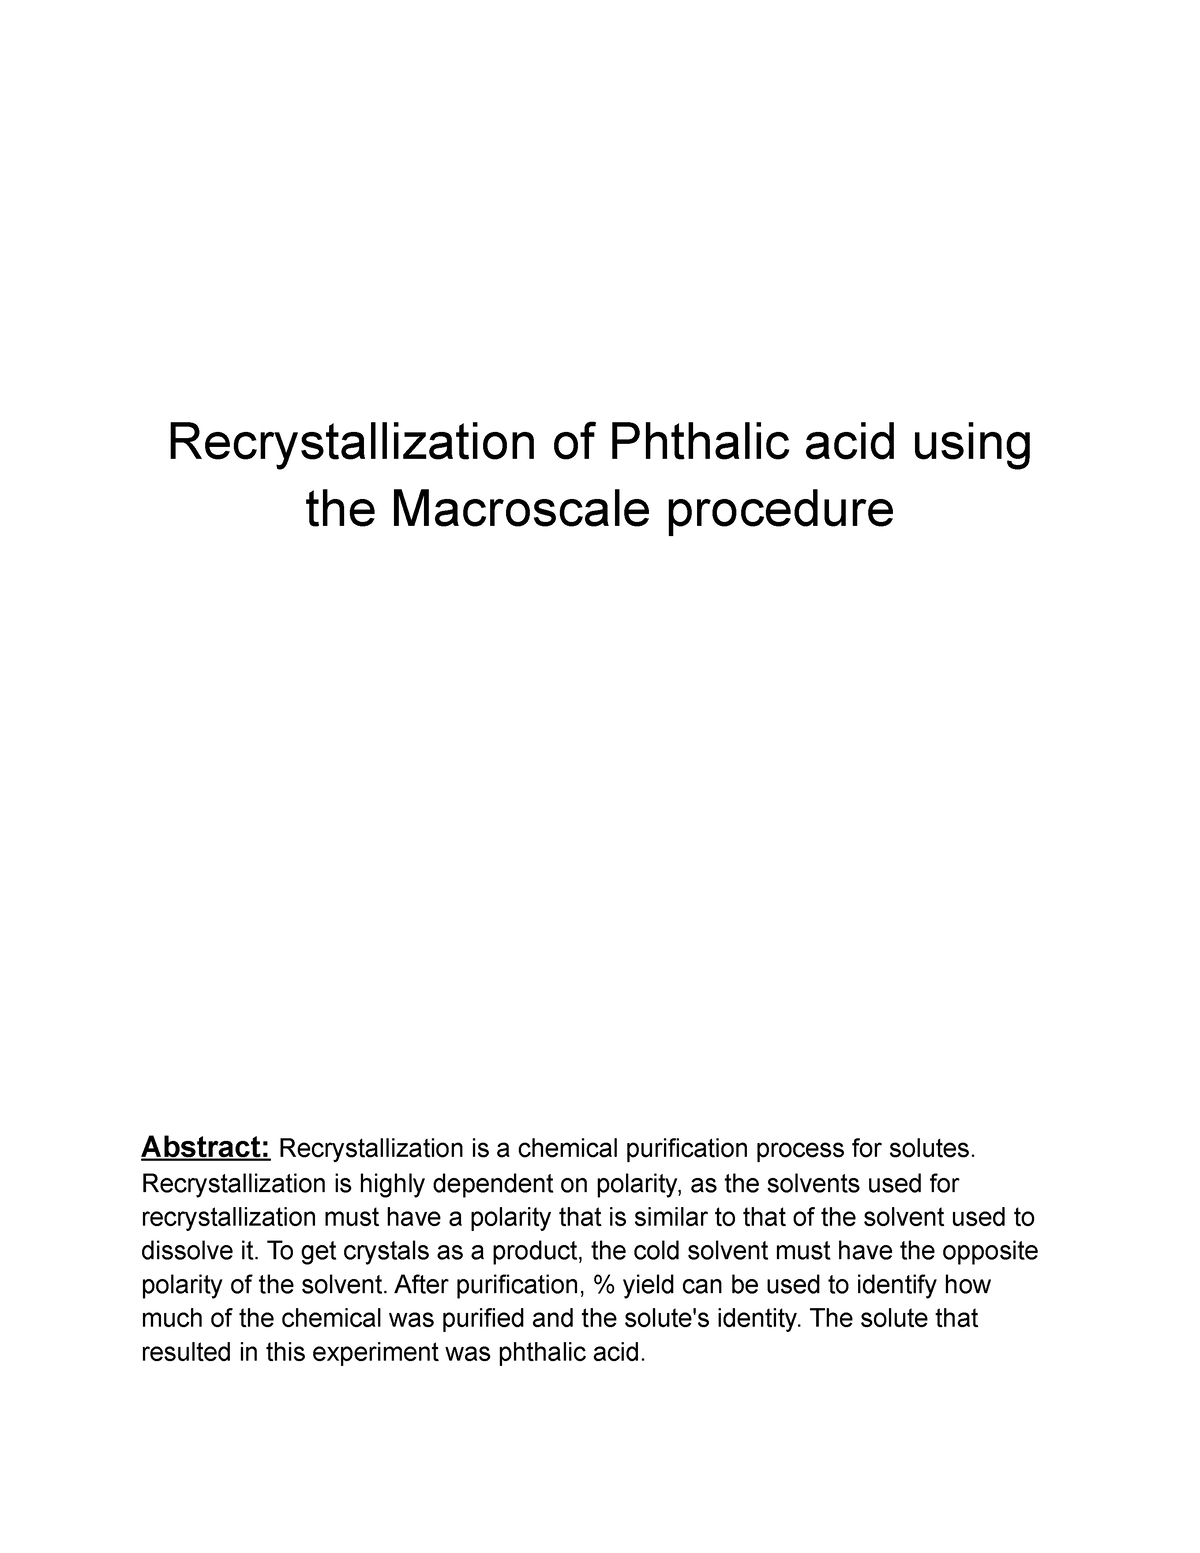 recrystallization of phthalic acid